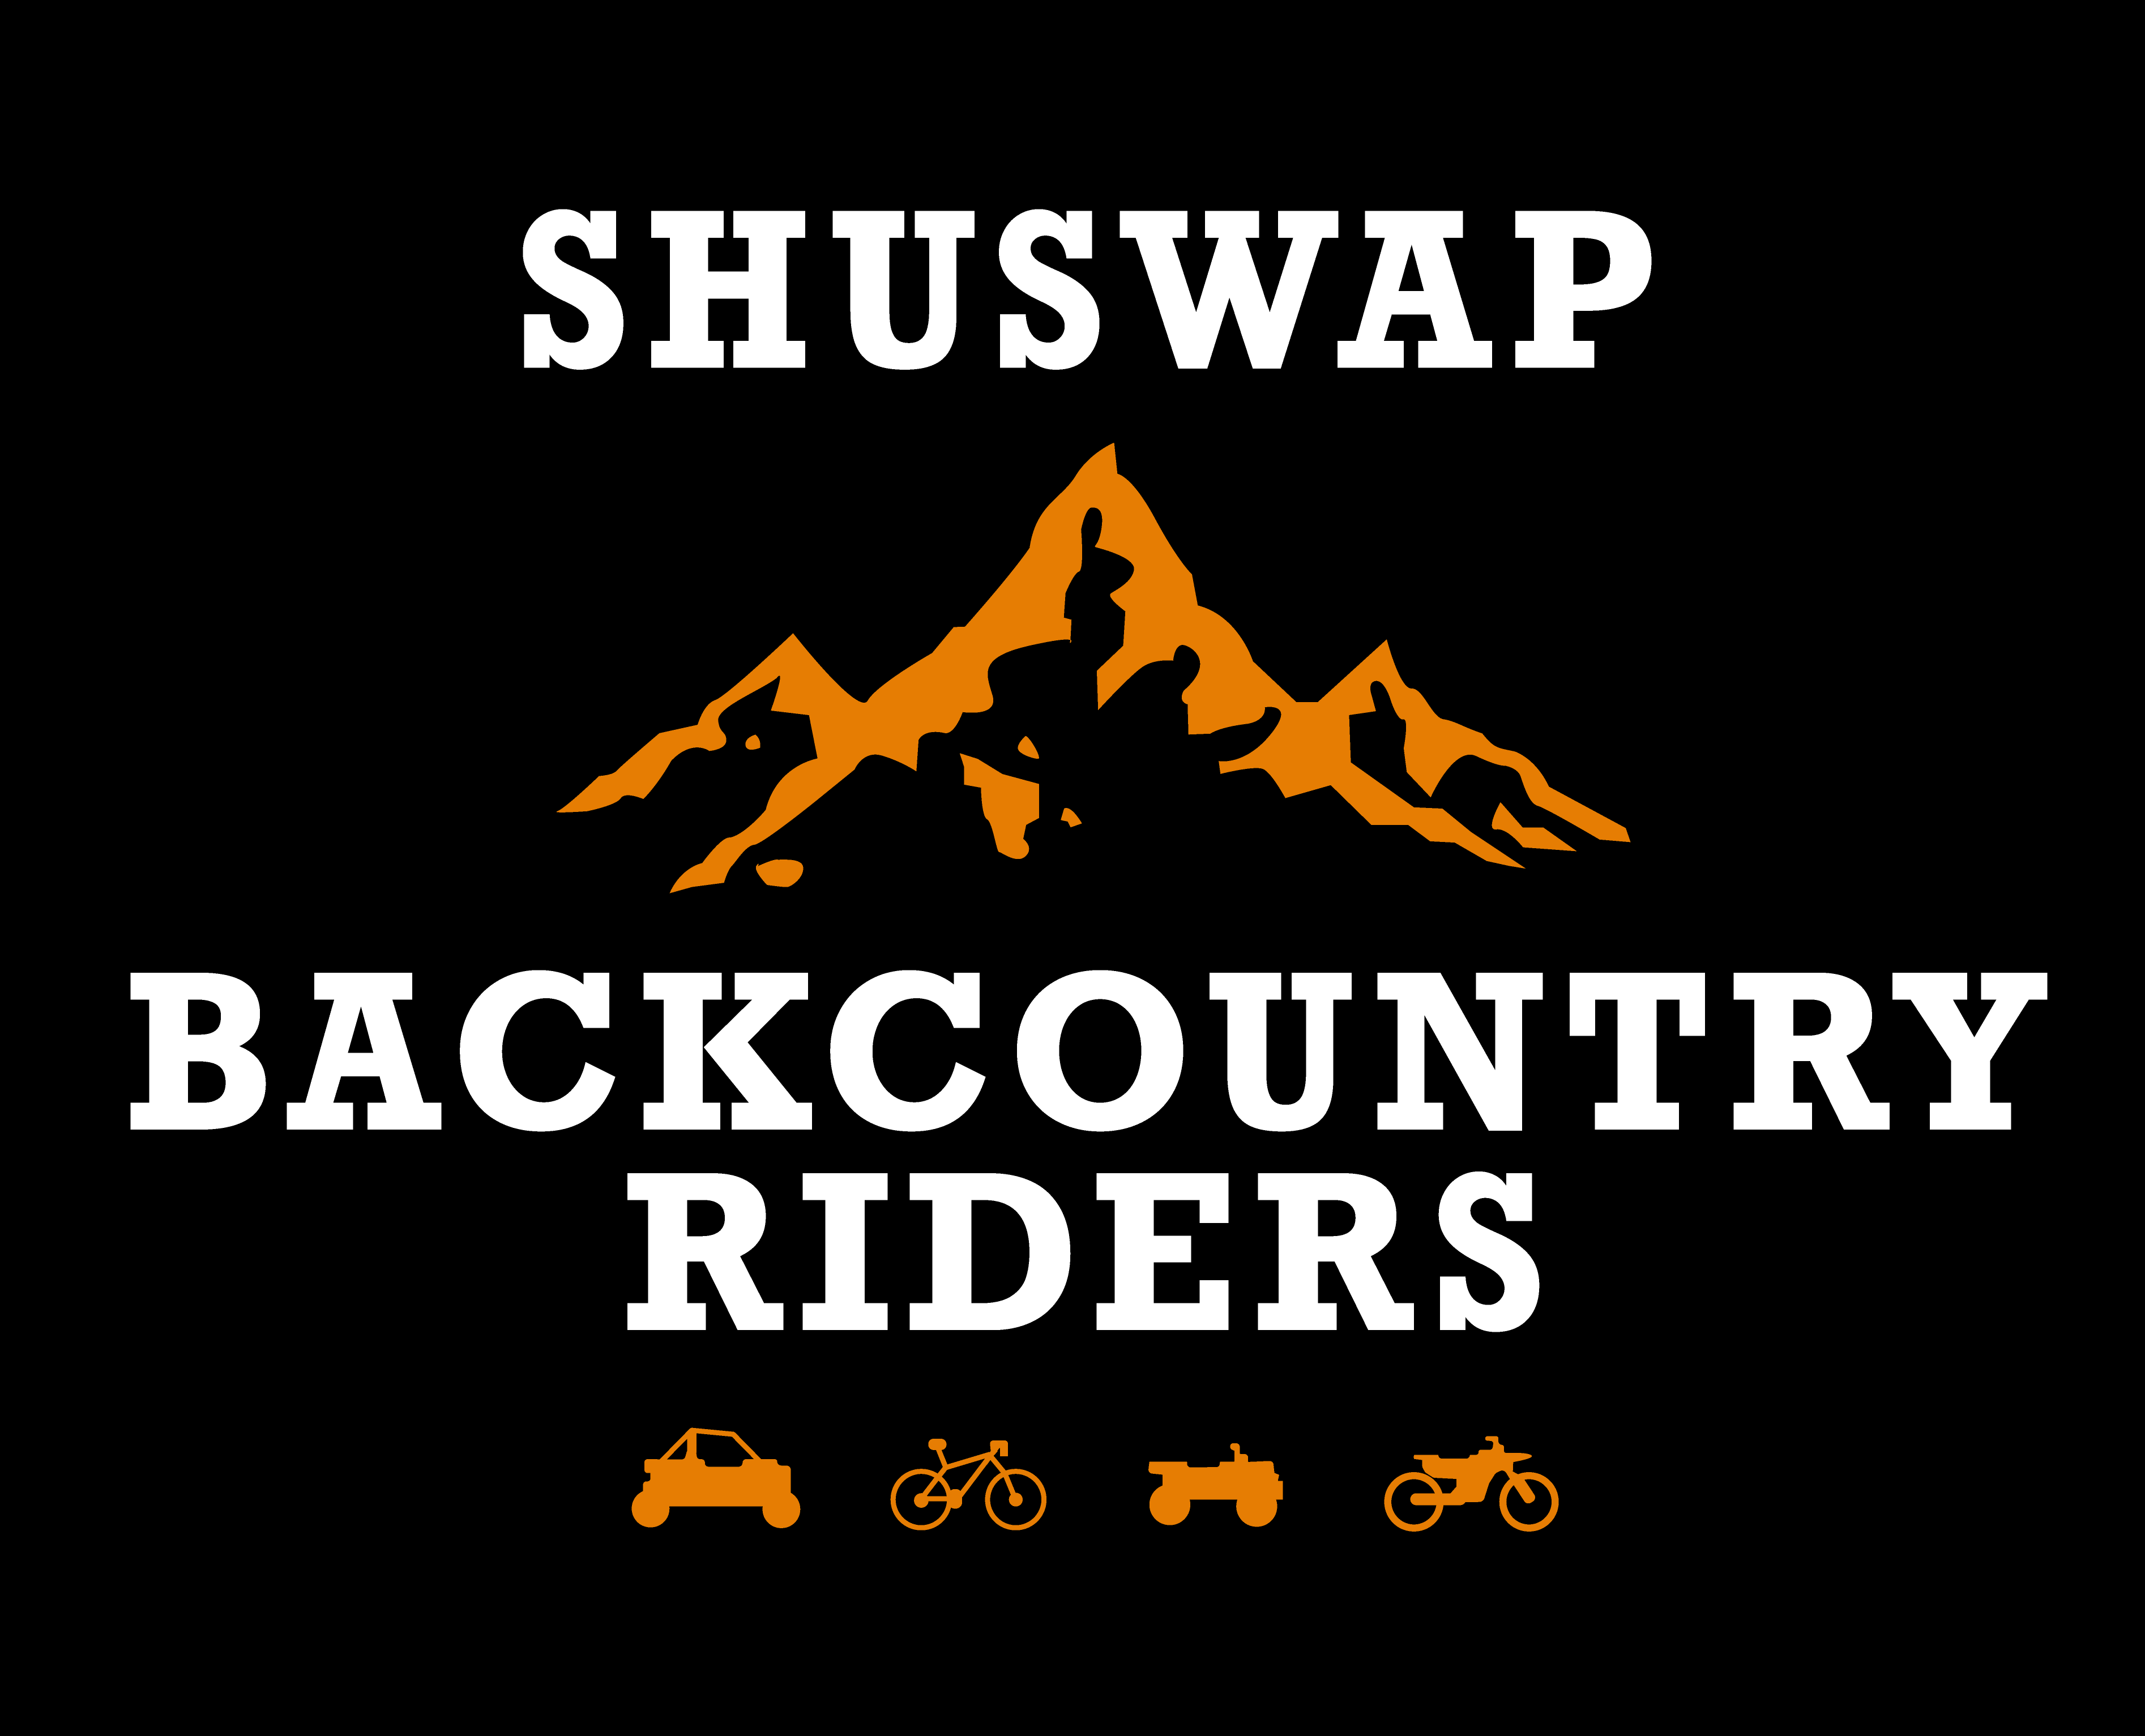 Shuswap Backcountry Riders